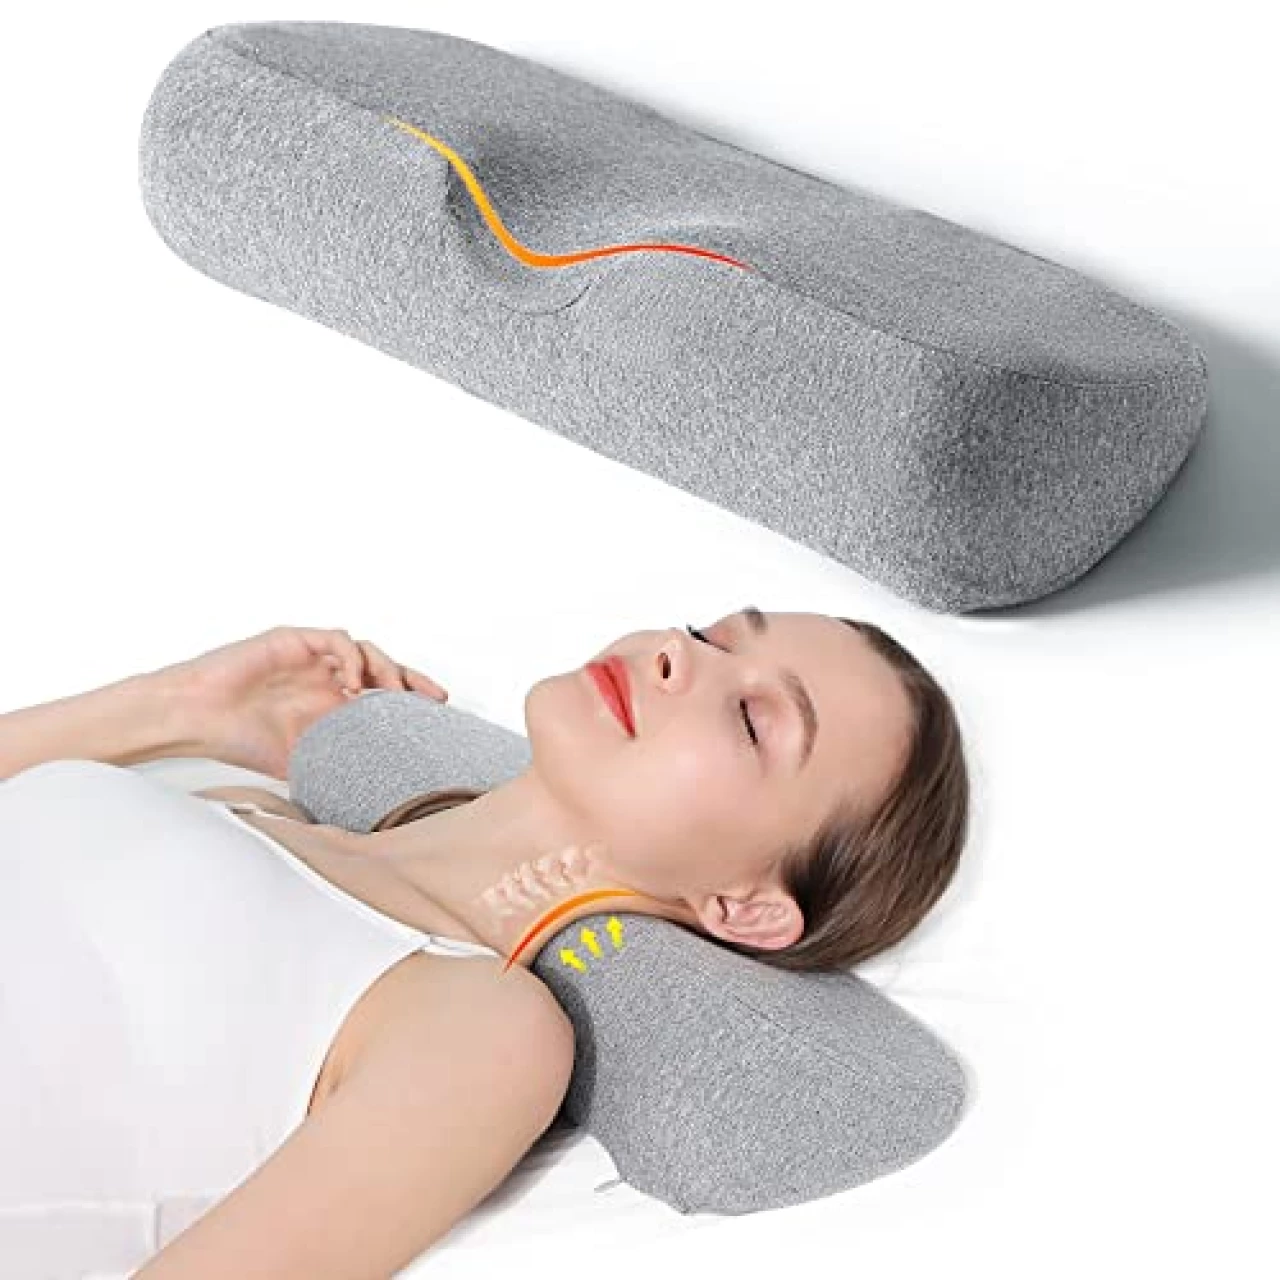 Cervical Neck Pillows for Pain Relief Sleeping, Memory Foam Neck Bolster Pillow for Stiff Pain Relief, Neck Support Pillow Neck Roll Pillow for Bed Pillow (Light Grey)